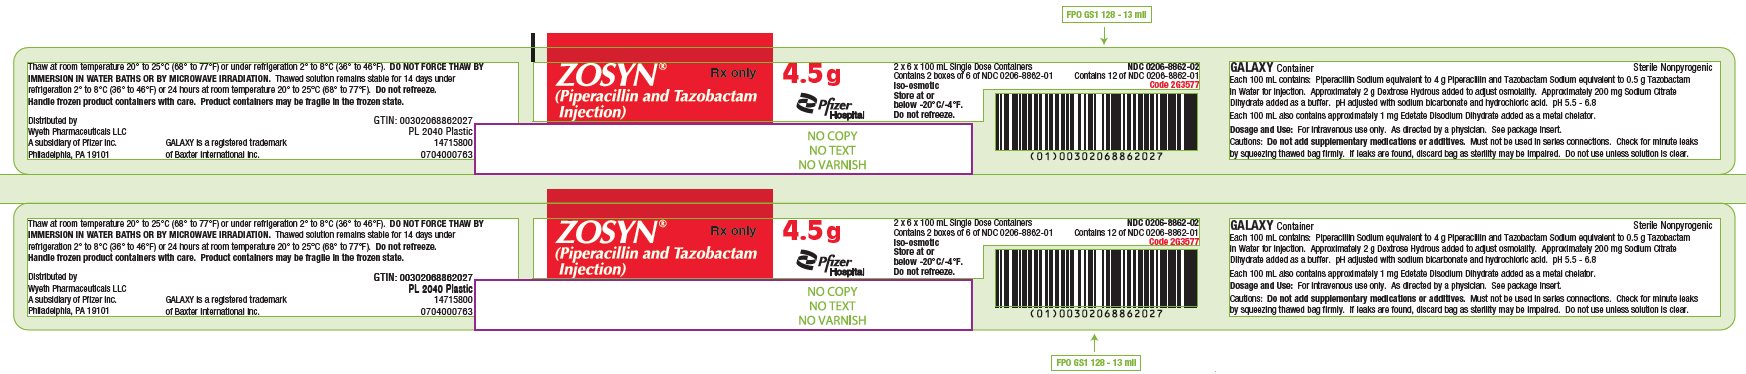 PRINCIPAL DISPLAY PANEL – 4.5 g Container Box Label